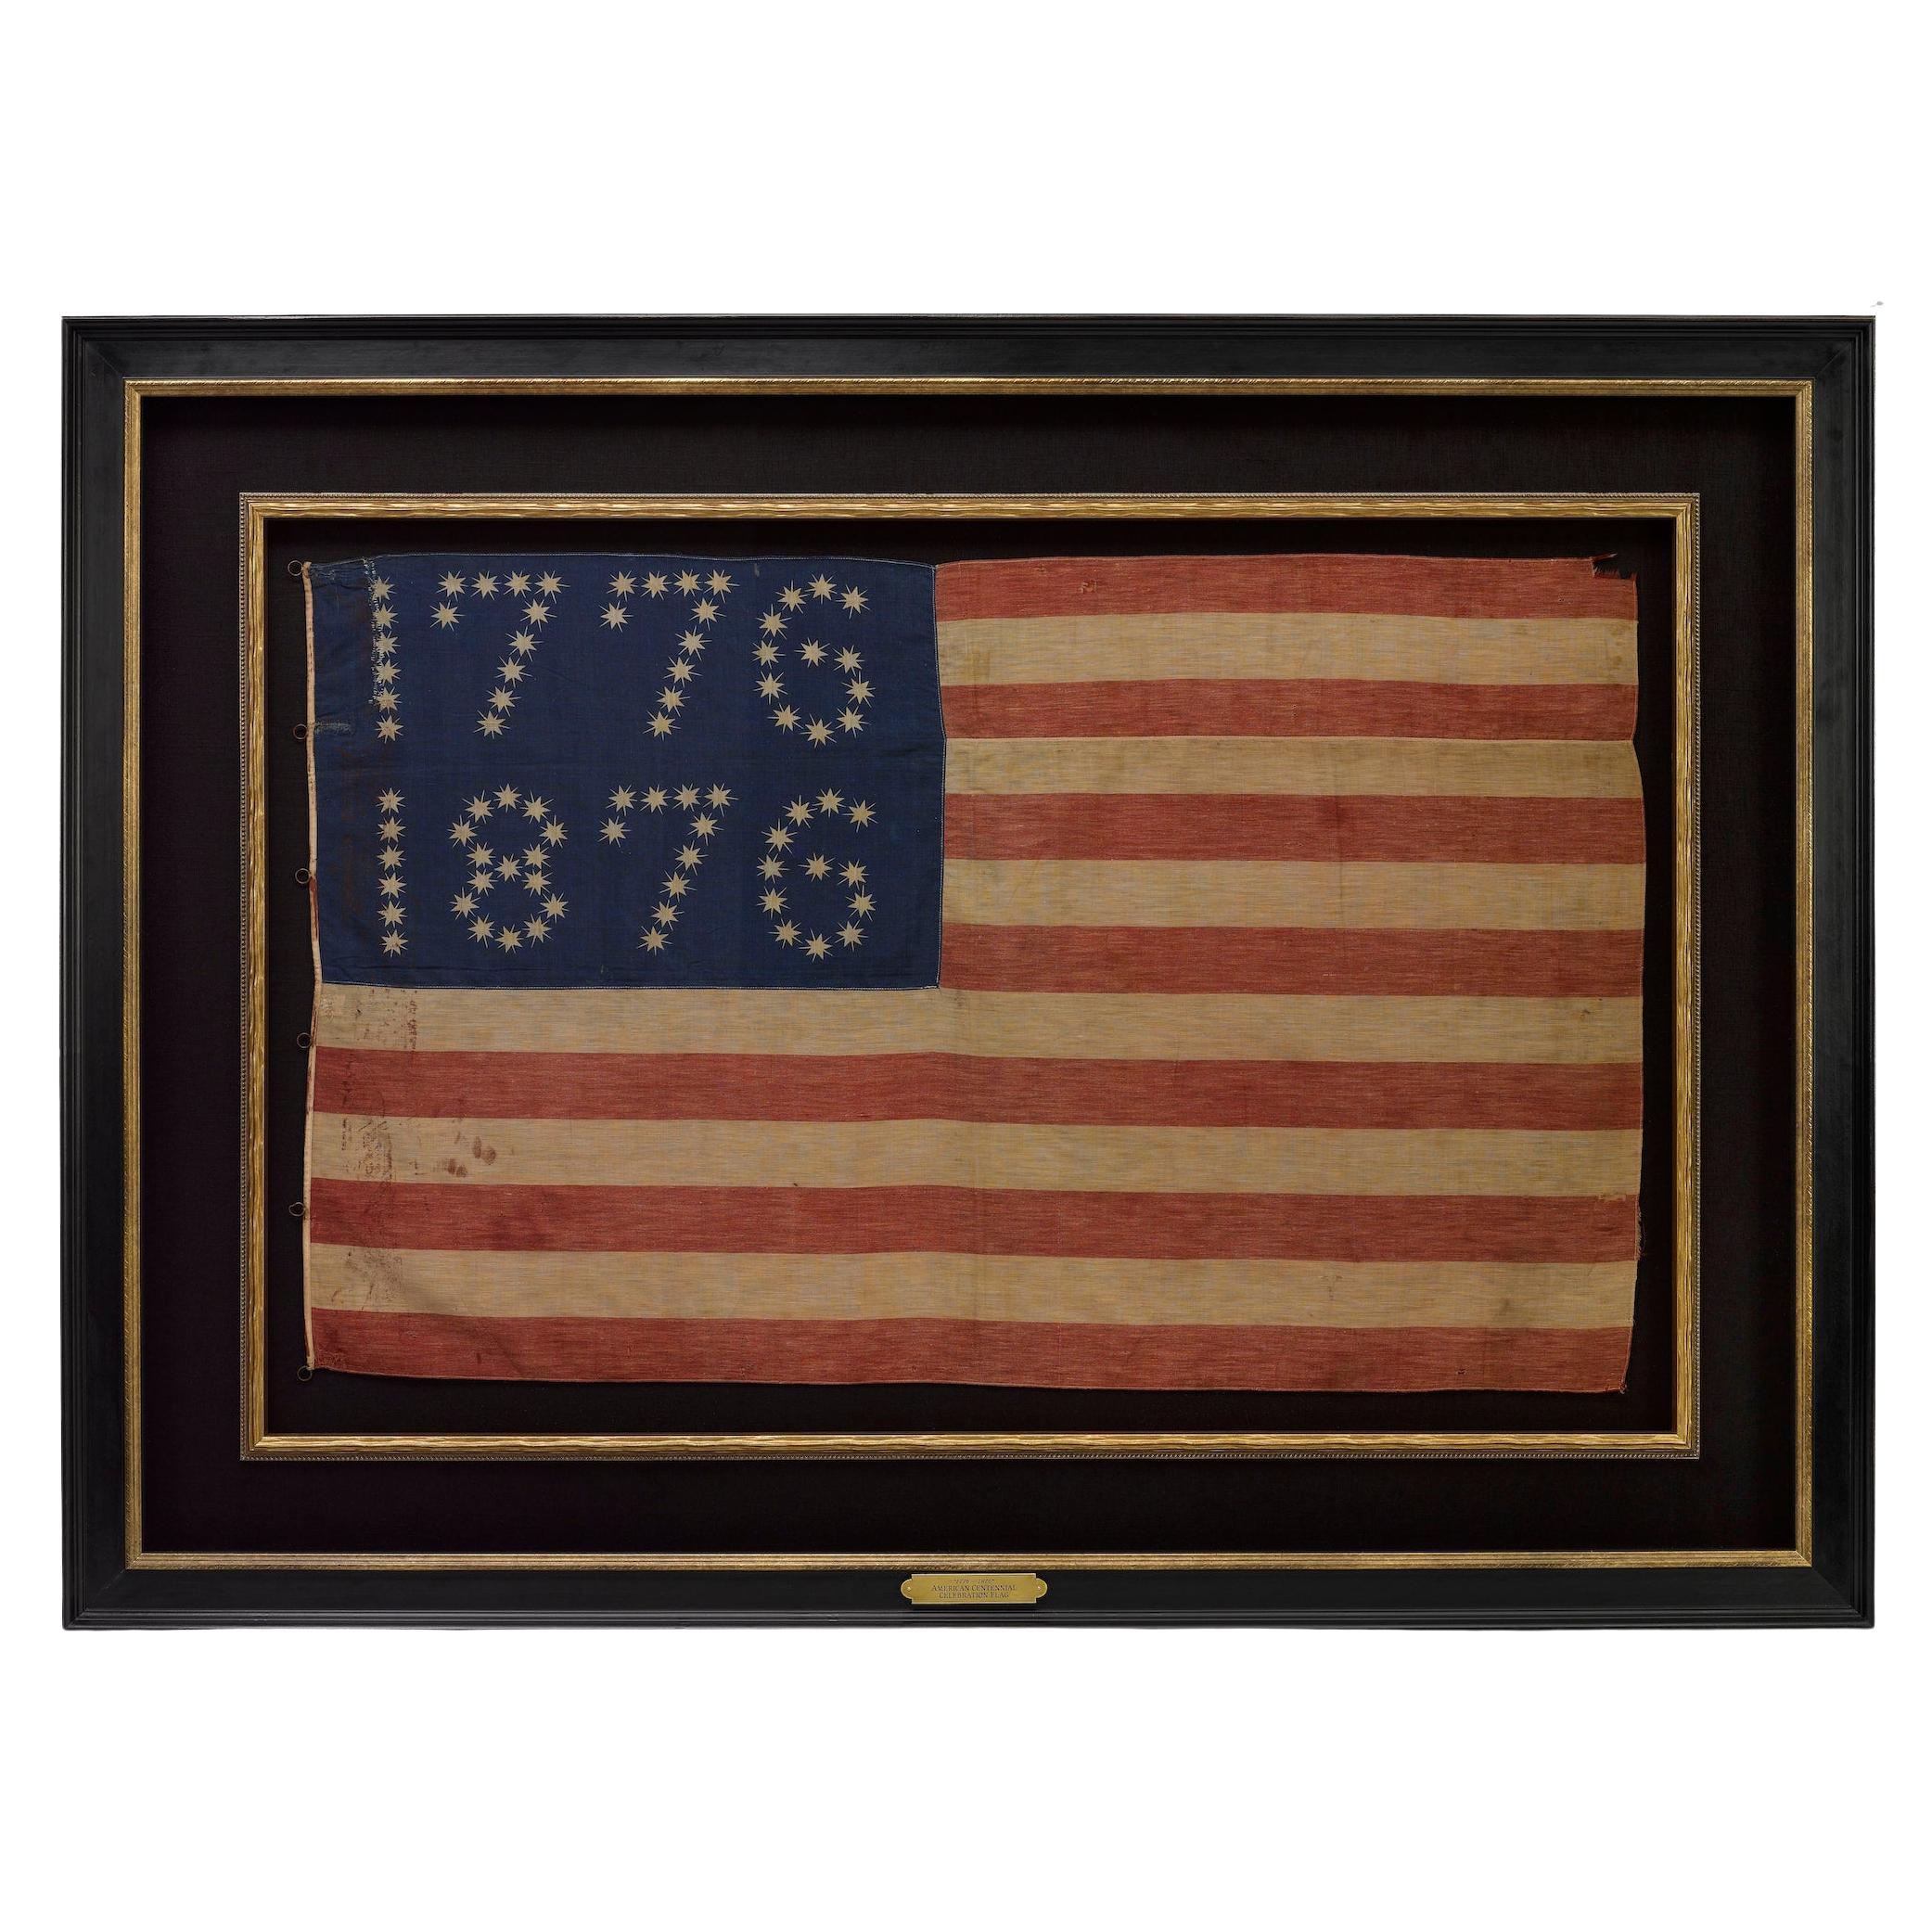 Centennial Celebration "1776-1876" American Flag Banner